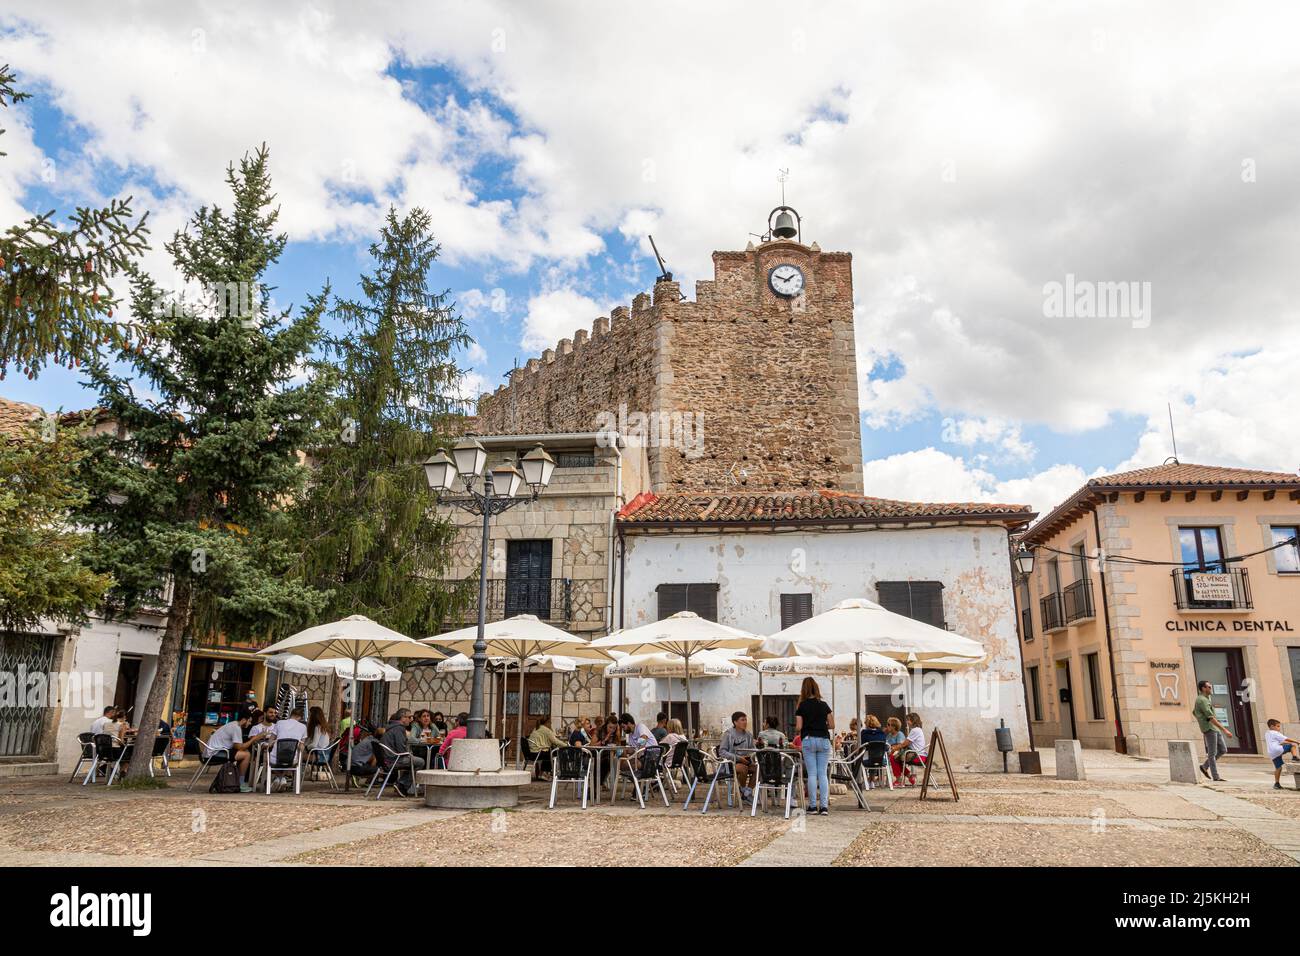 Buitrago del Lozoya, Spain. The Torre Albarrana, a city gate and defensive clock tower of the walled Old Town, seen from Plaza de la Constitucion Stock Photo